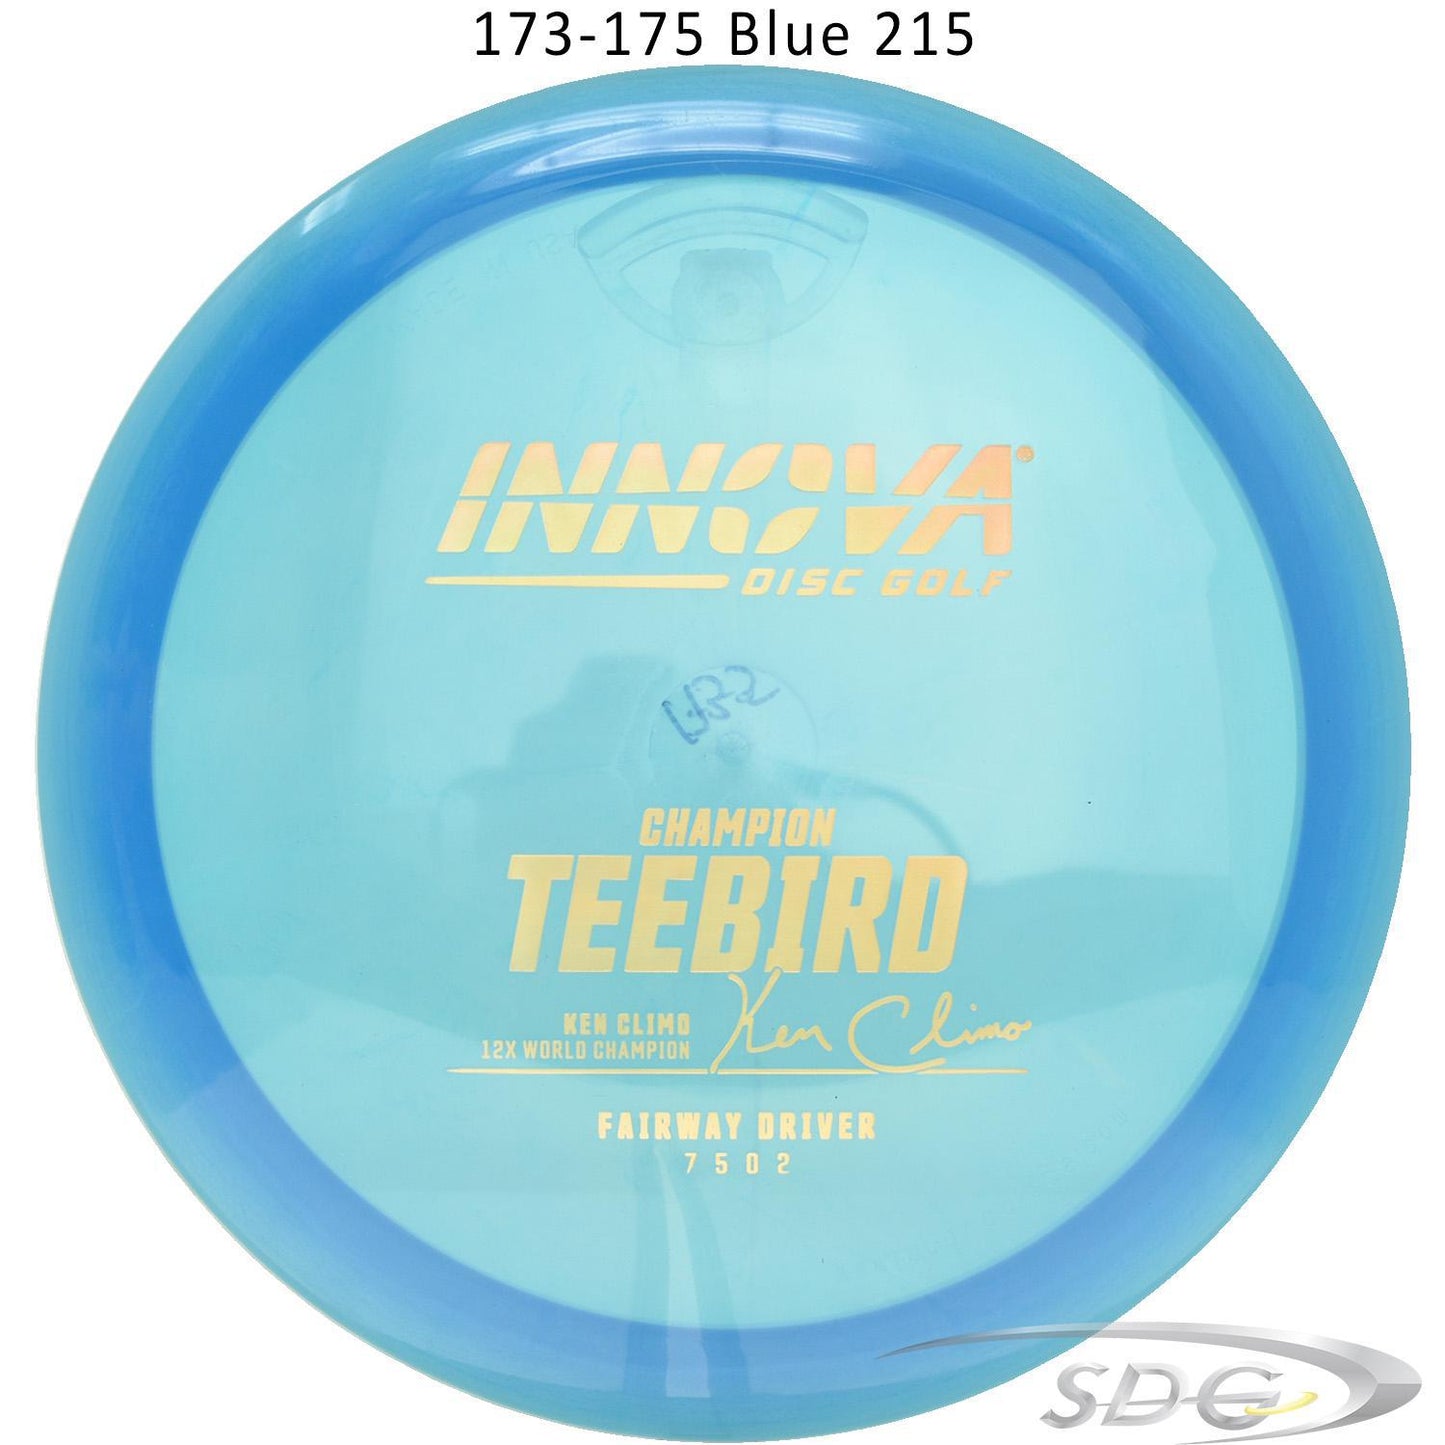 innova-champion-teebird-disc-golf-fairway-driver 173-175 Blue 215 